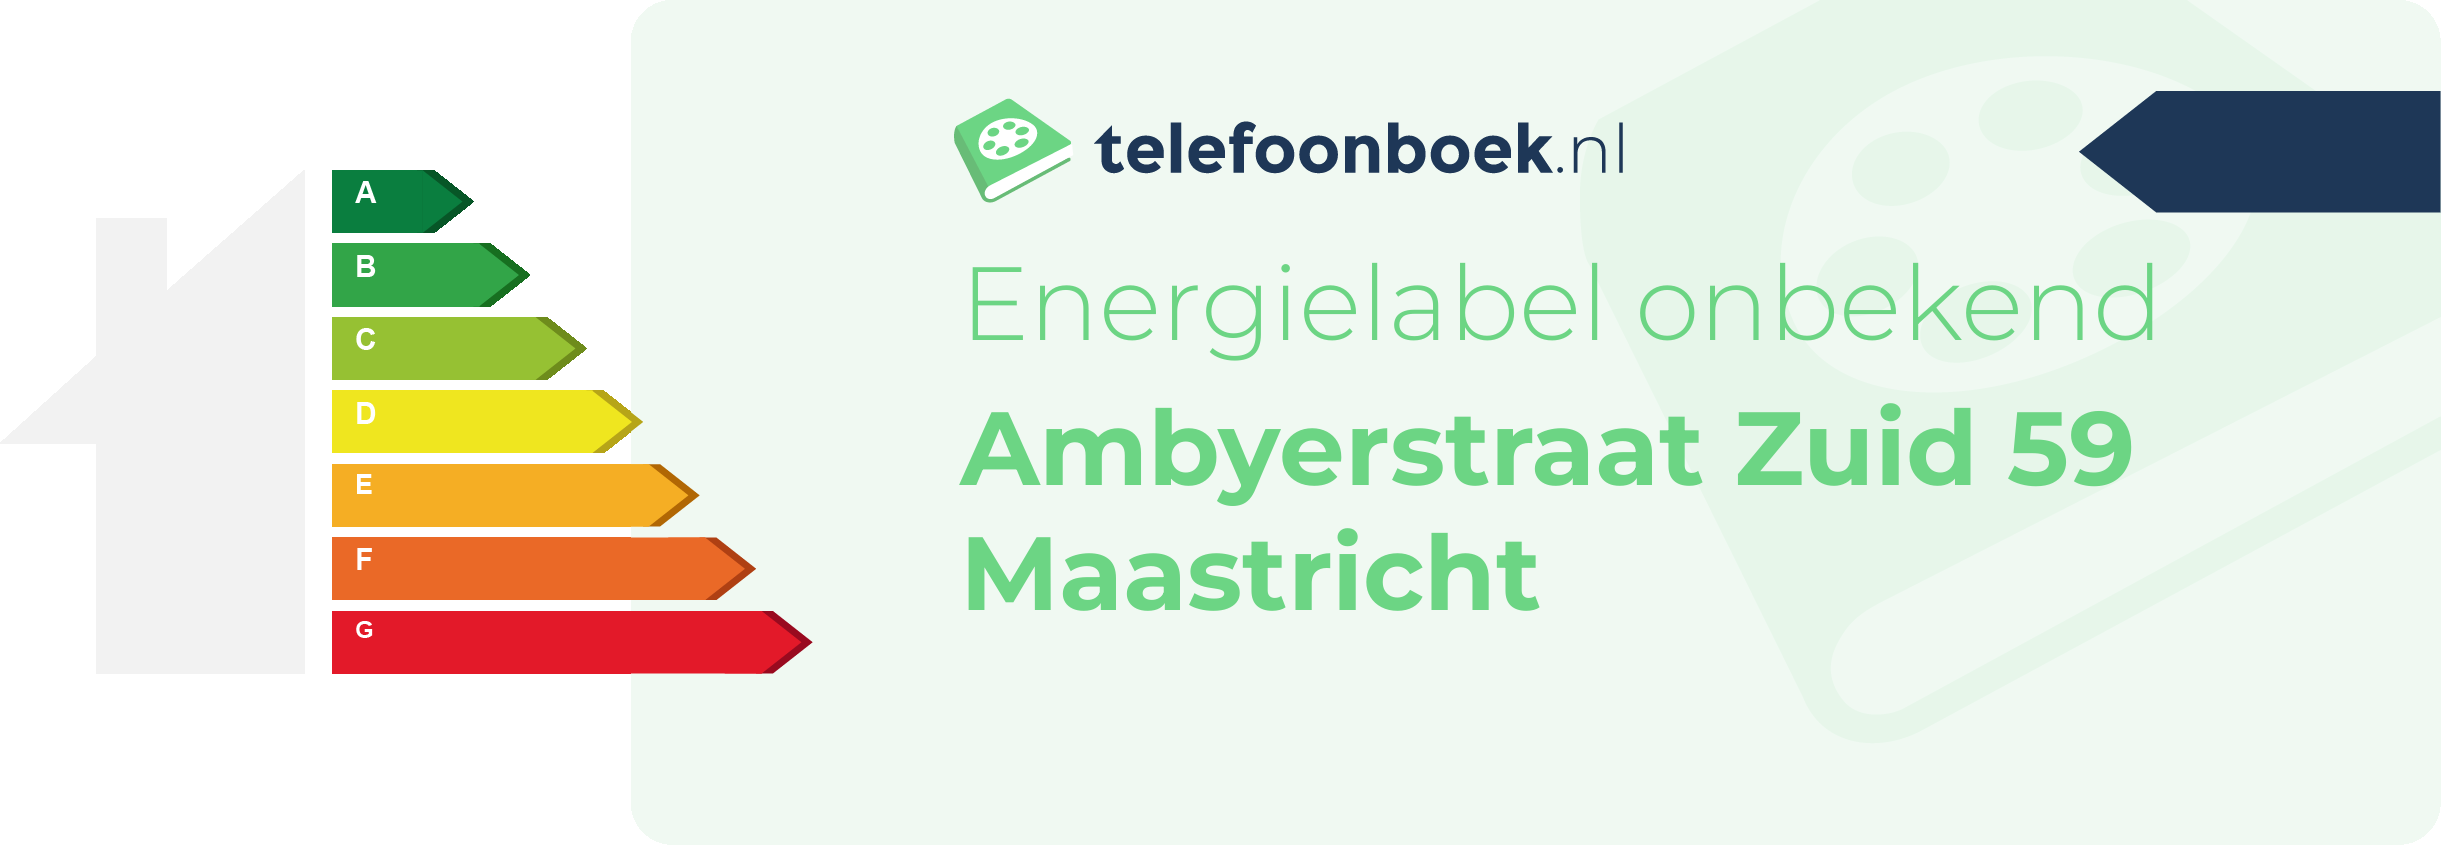 Energielabel Ambyerstraat Zuid 59 Maastricht